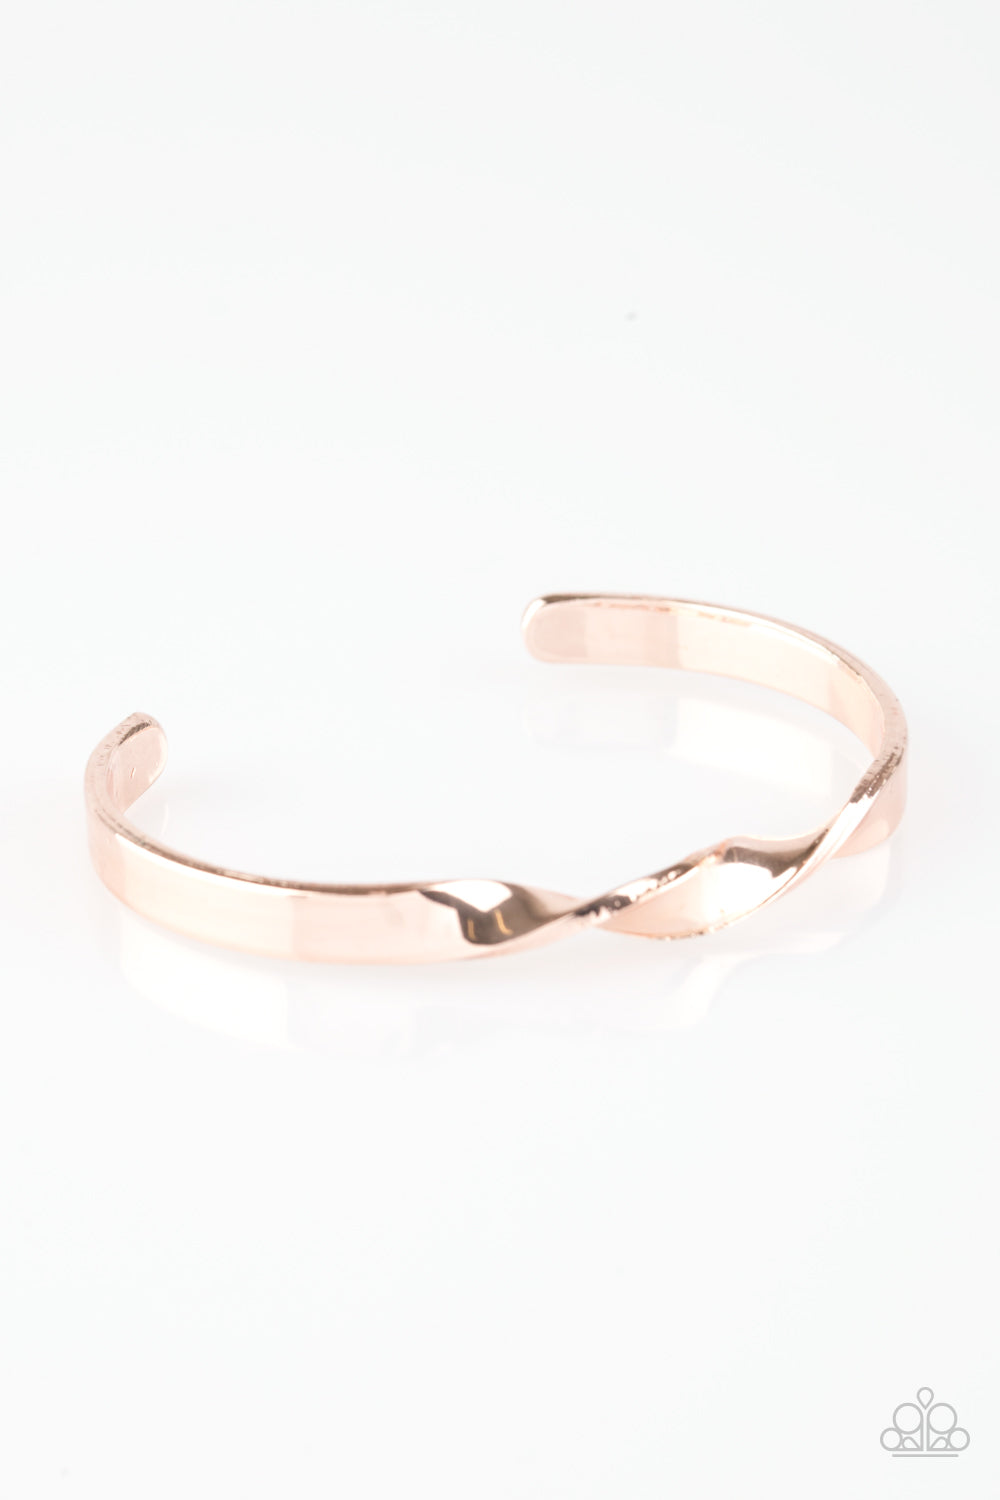 Savanna Oasis - Rose Gold Bracelet - Paparazzi Accessories